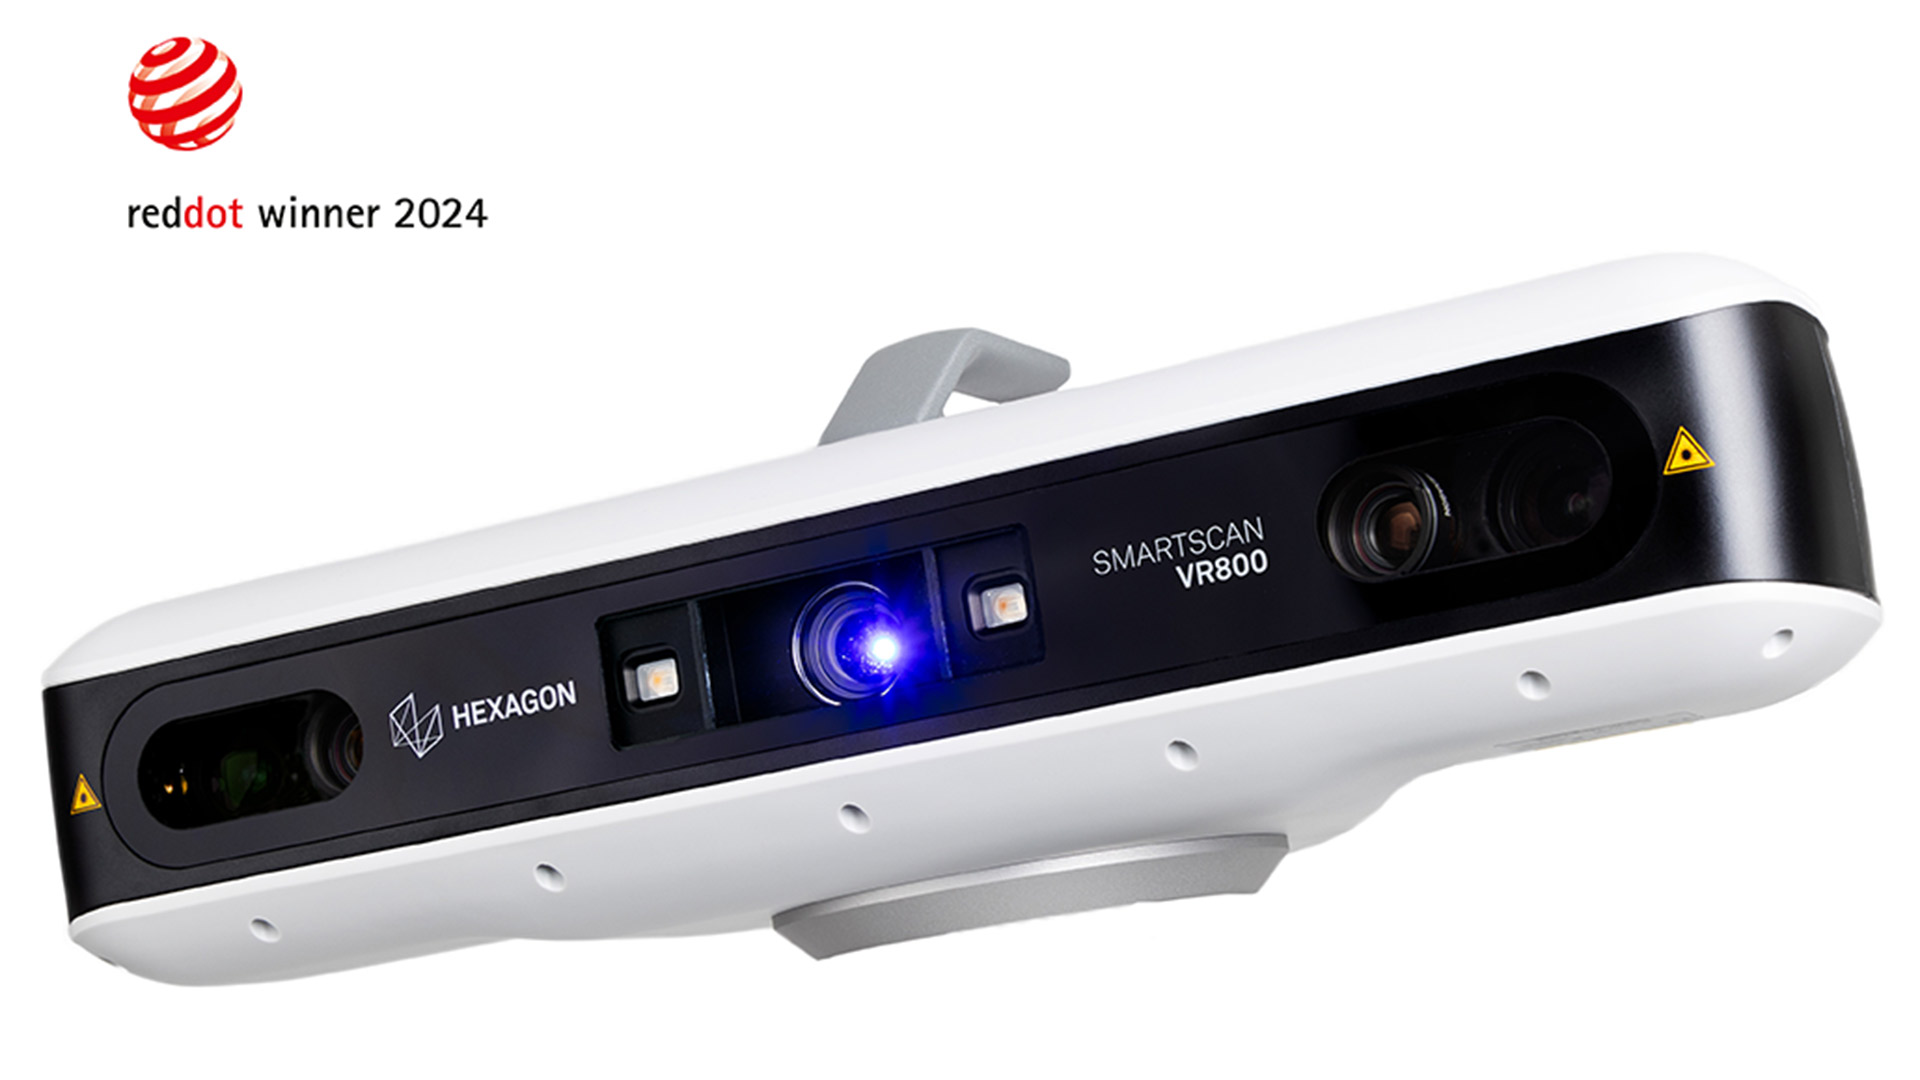 Hexagon’s innovative SmartScan VR800 3D scanner wins Red Dot Design Award for outstanding product design